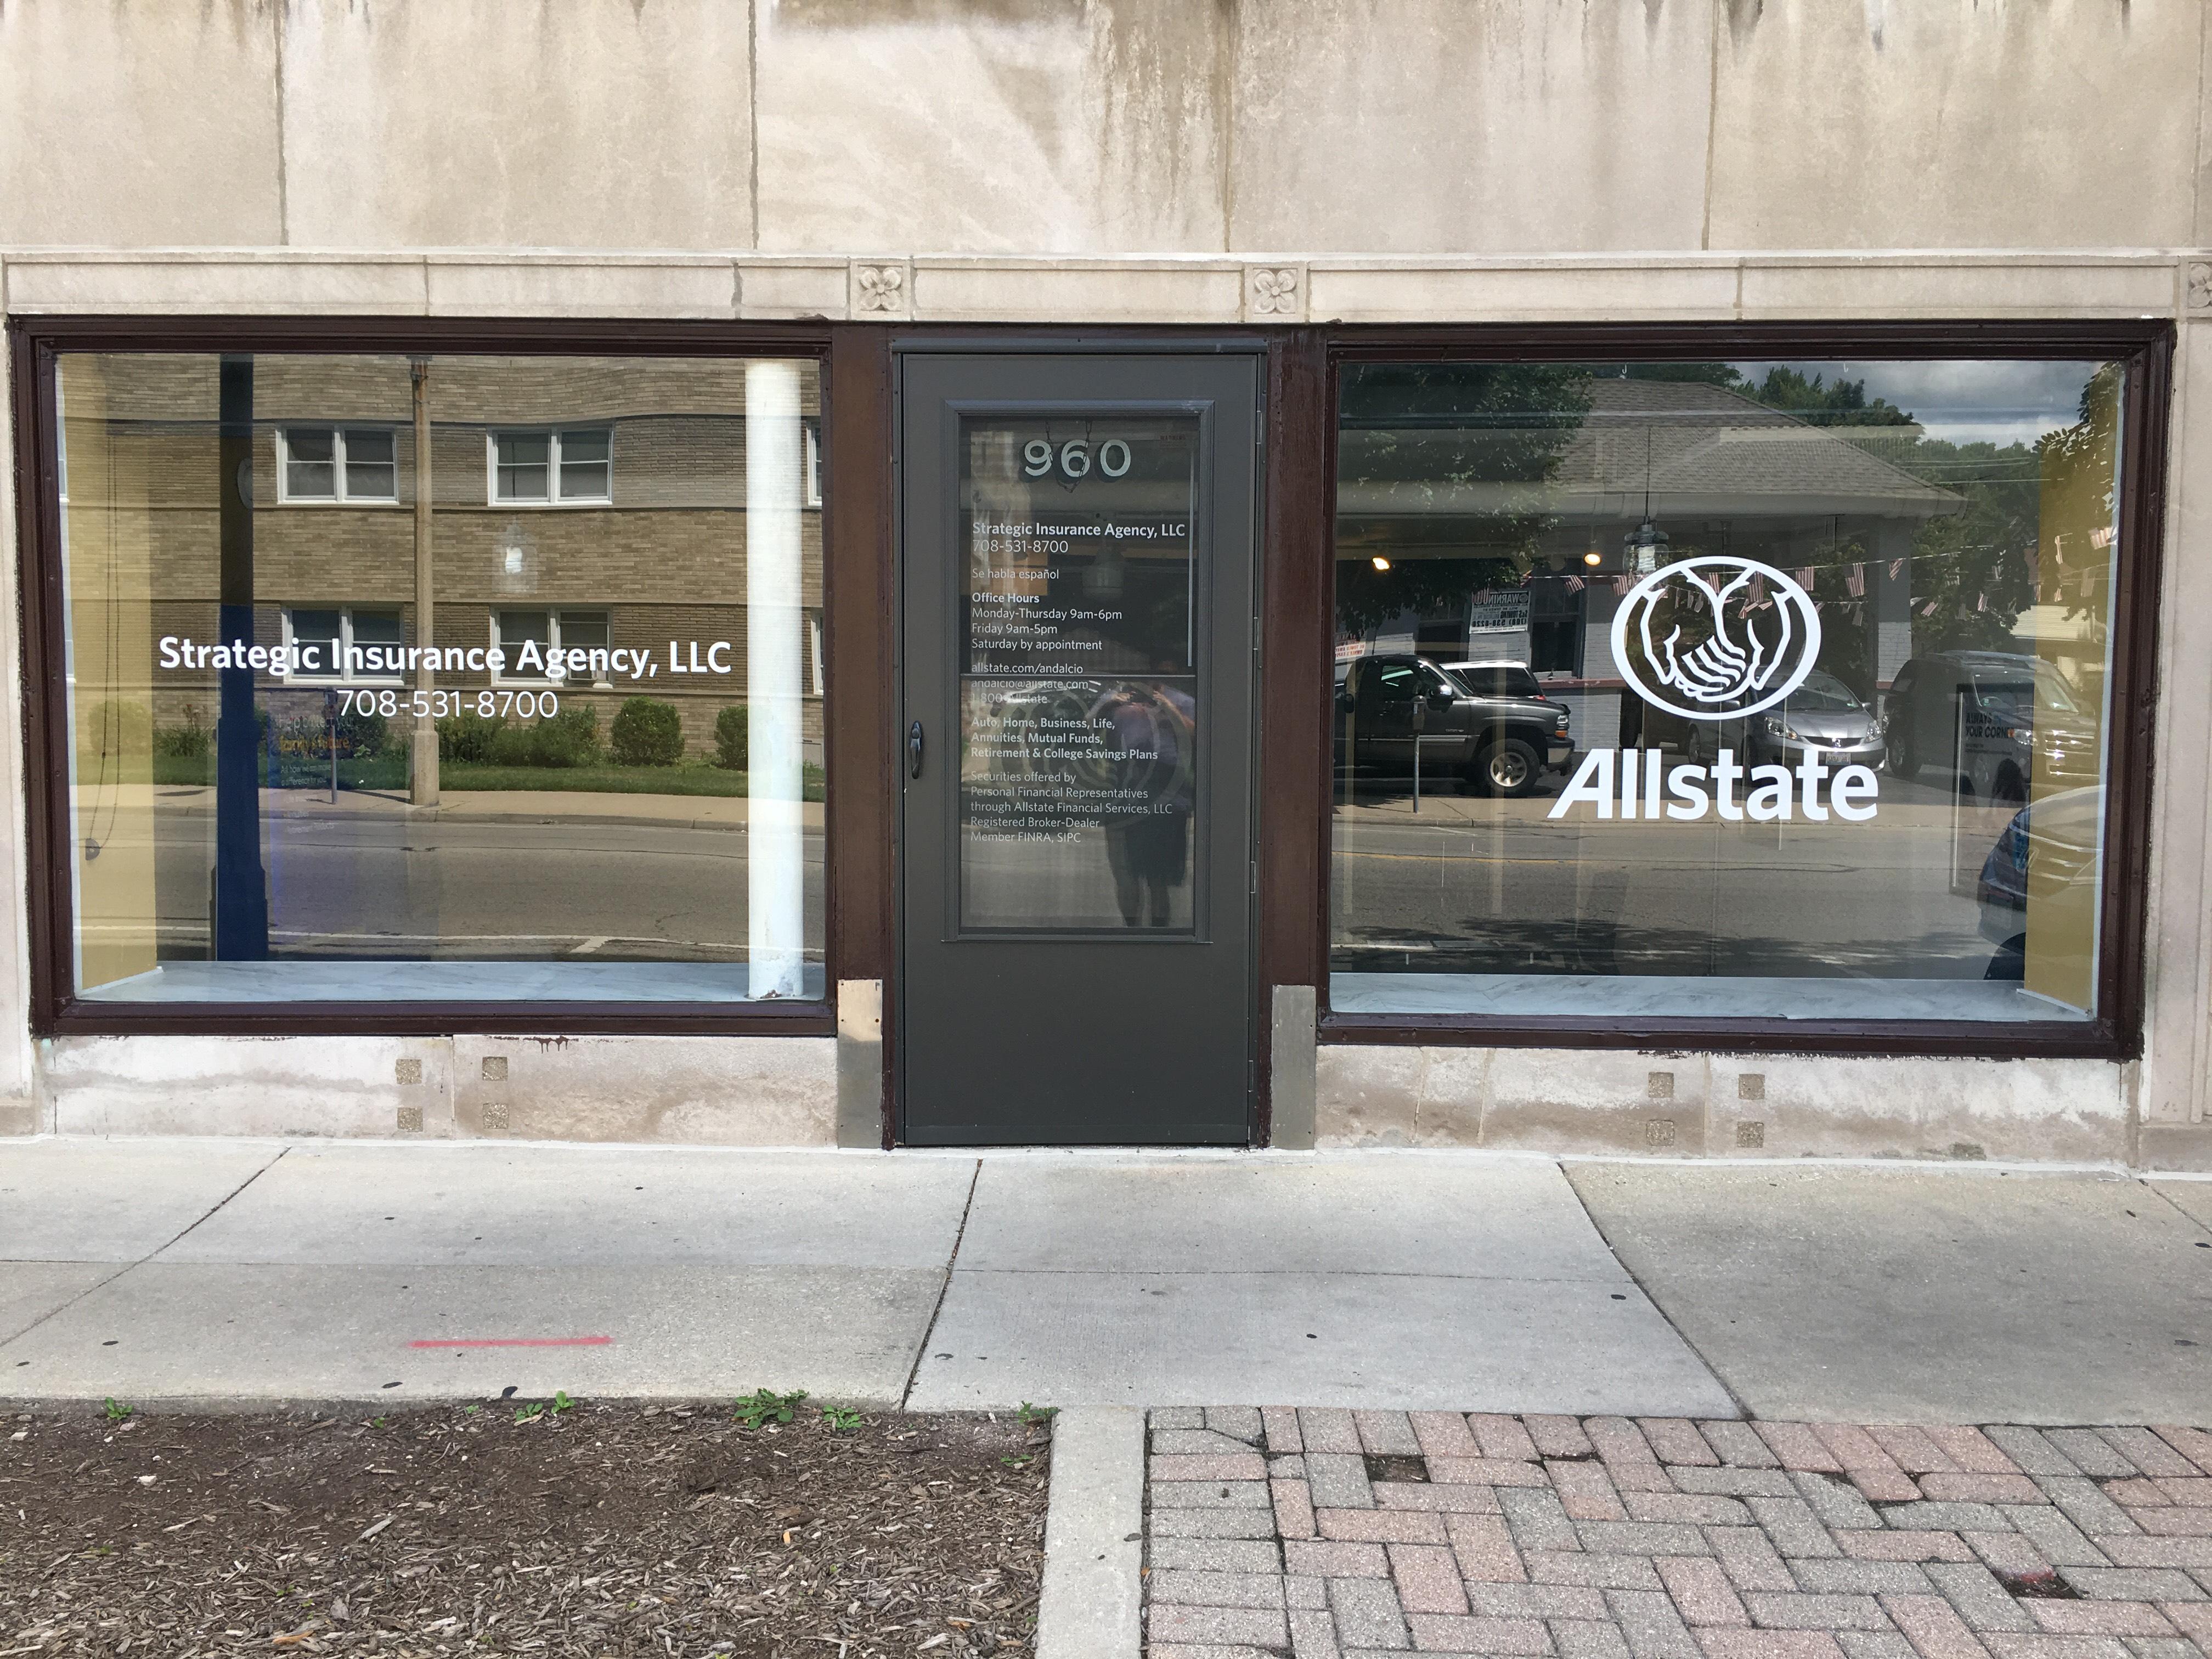 Strategic Insurance Agency, LLC.: Allstate Insurance Photo